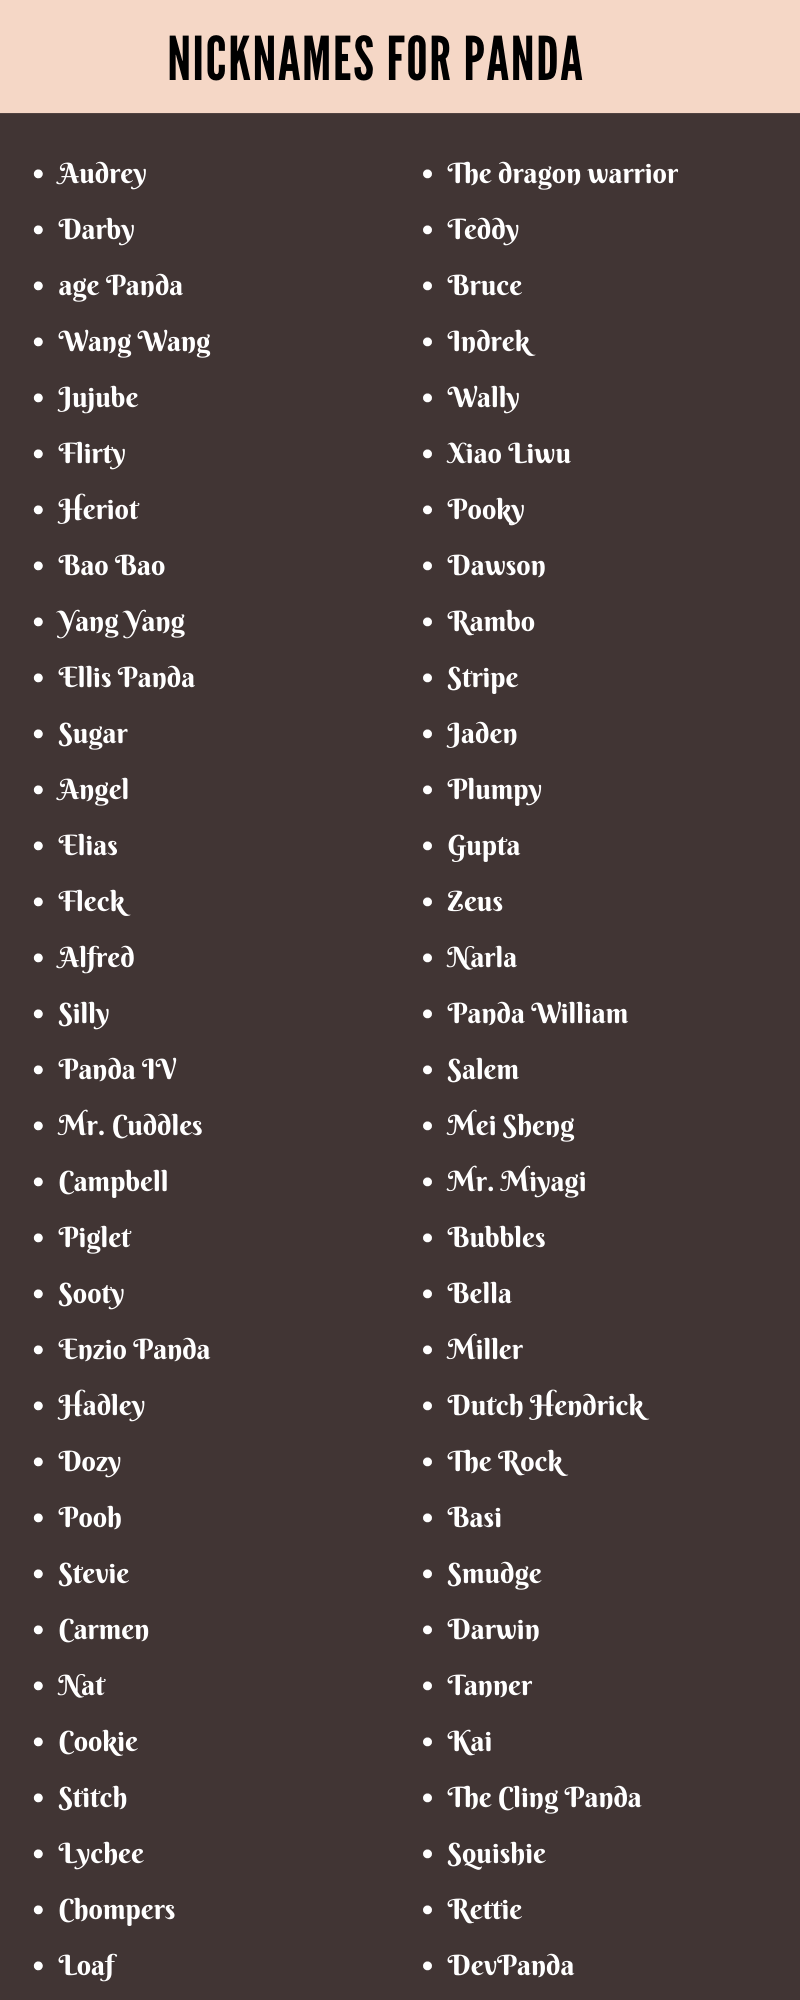 Nicknames For Panda